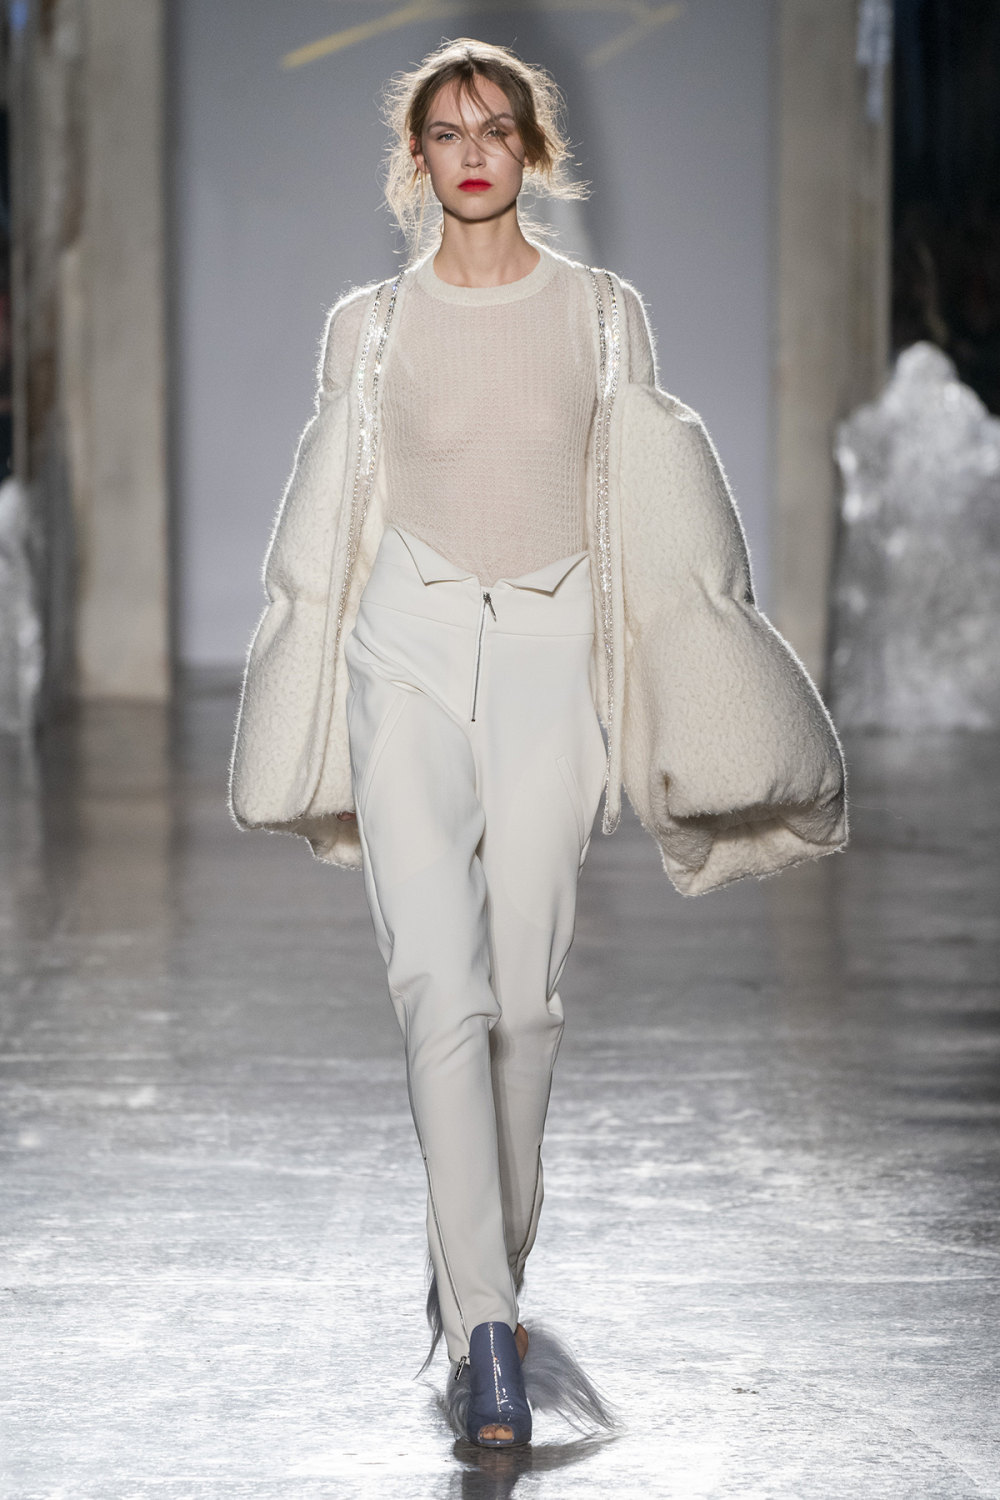 Genny时装系列将黑豹印花混合在一起搭配宽松梦幻般的白色礼服-2.jpg